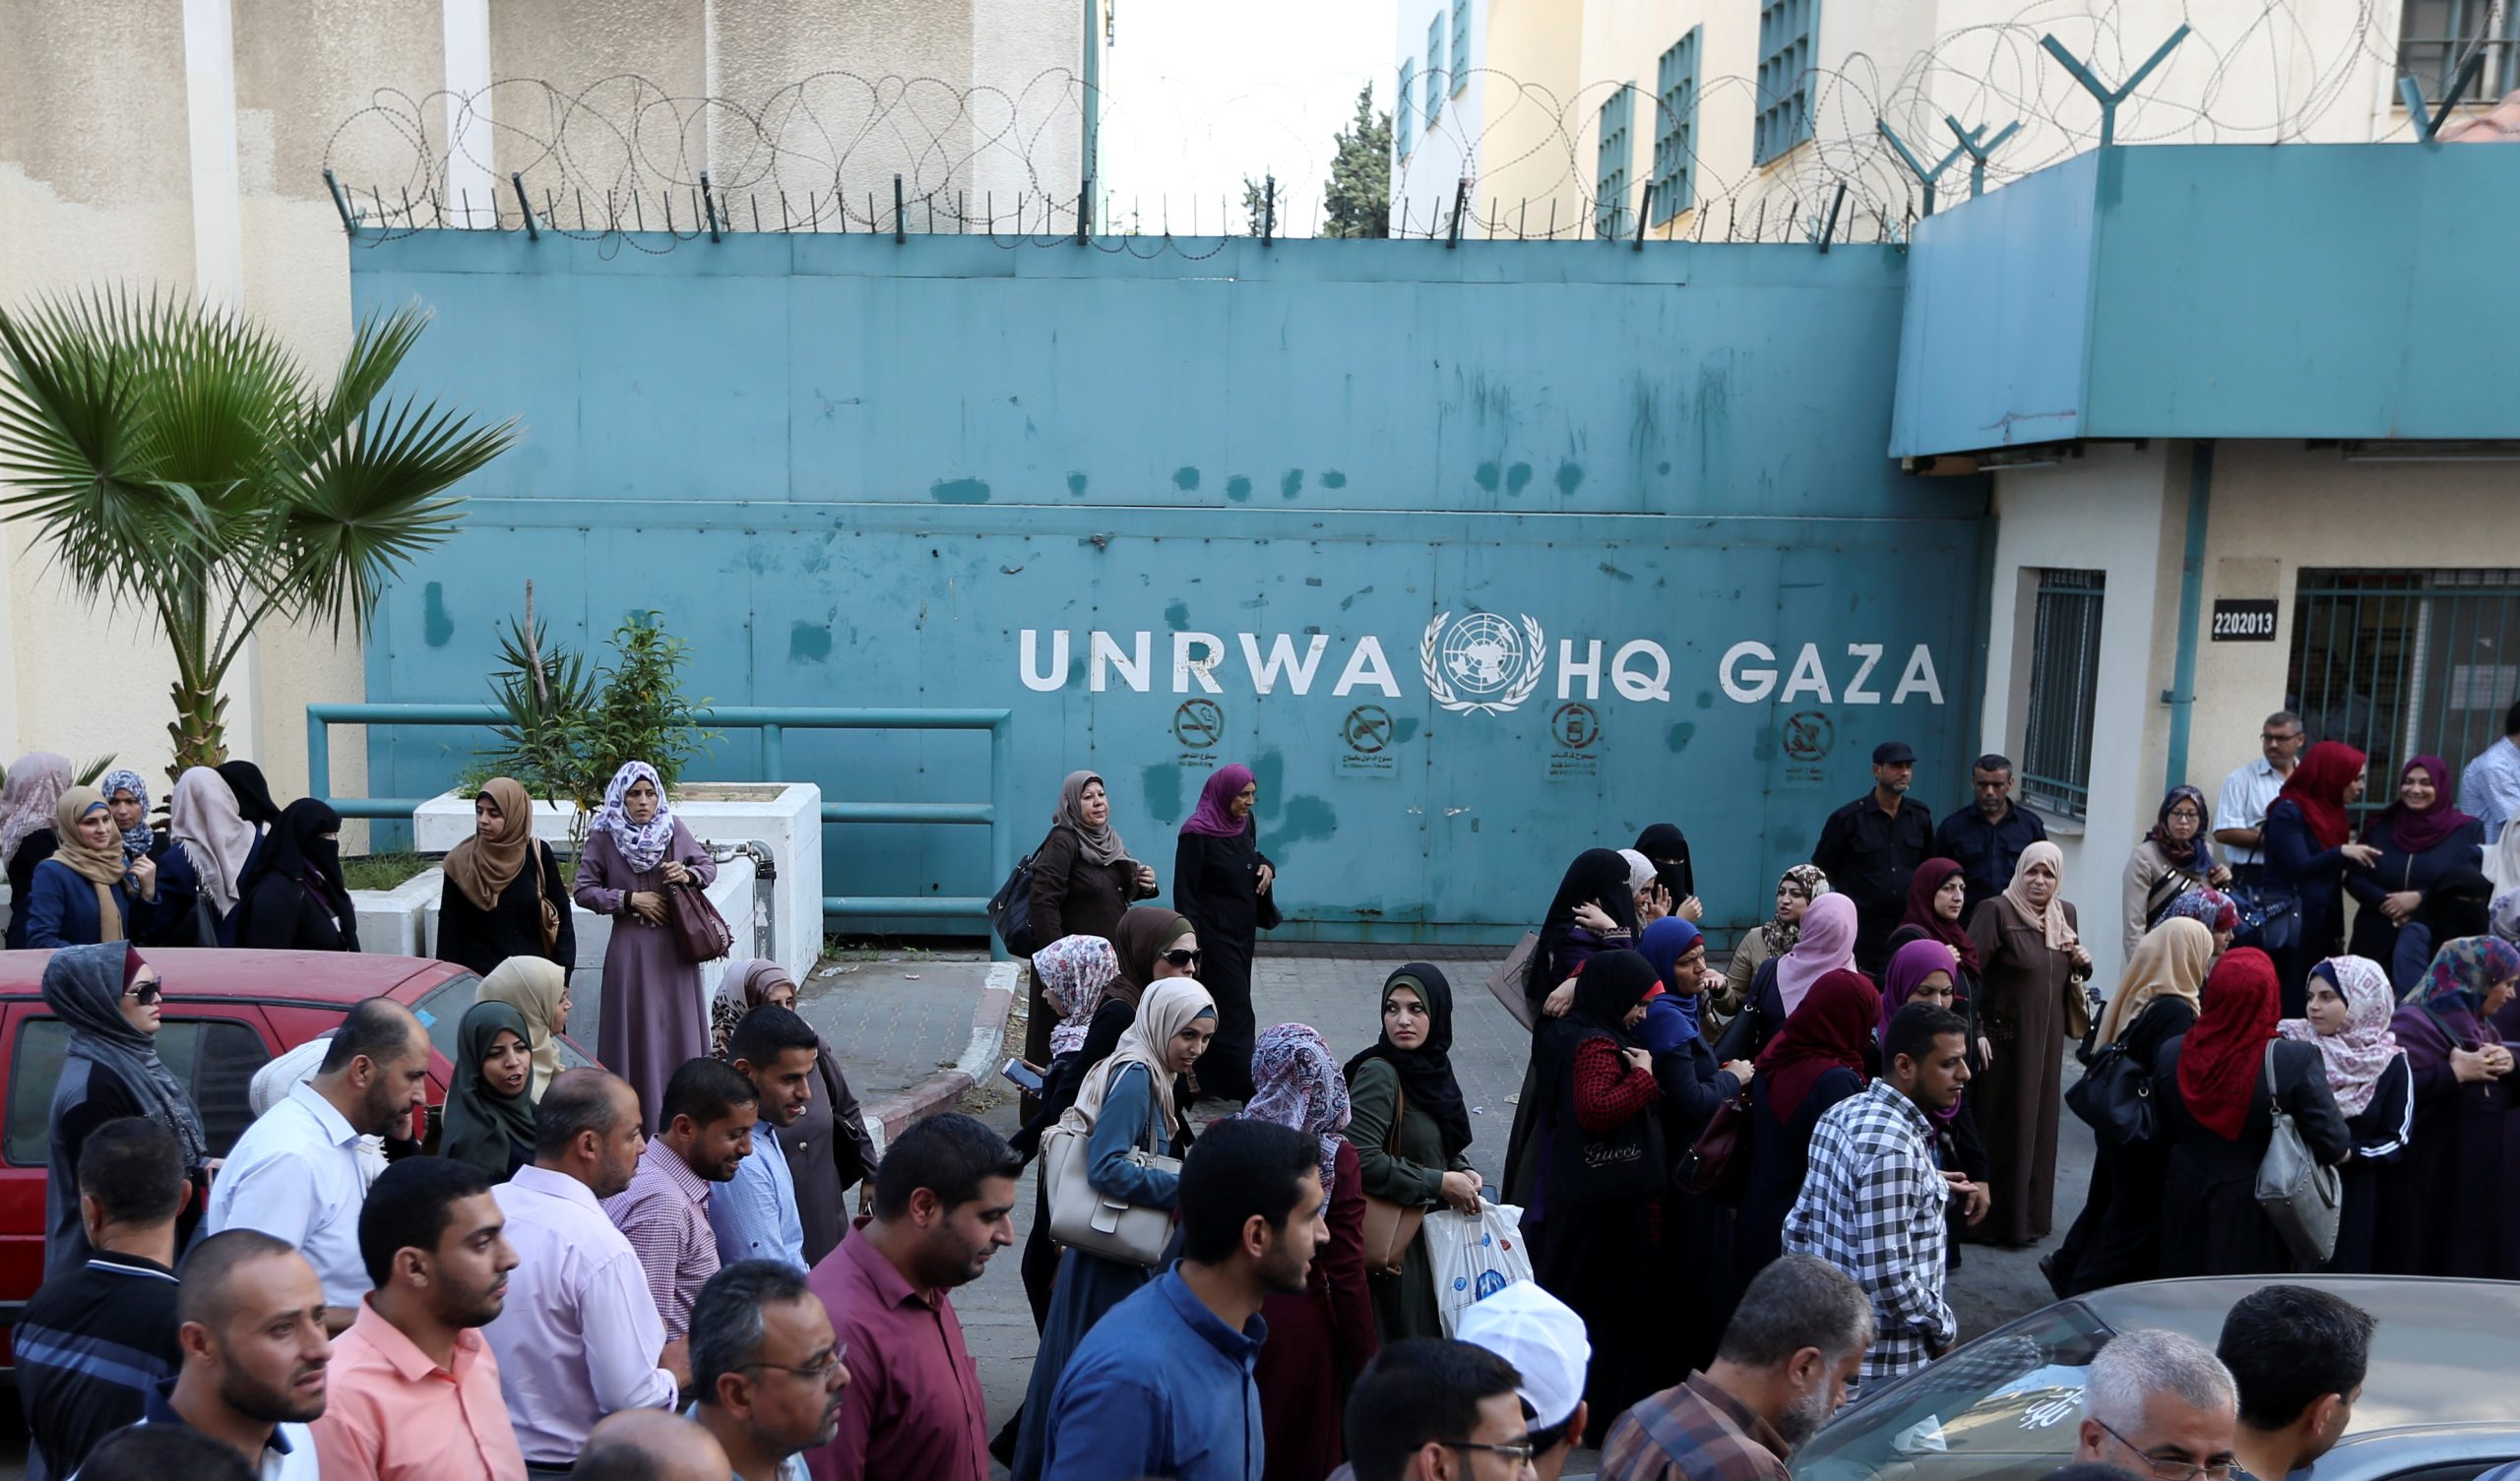 Suspicious accounts on X amplify allegations against UNRWA